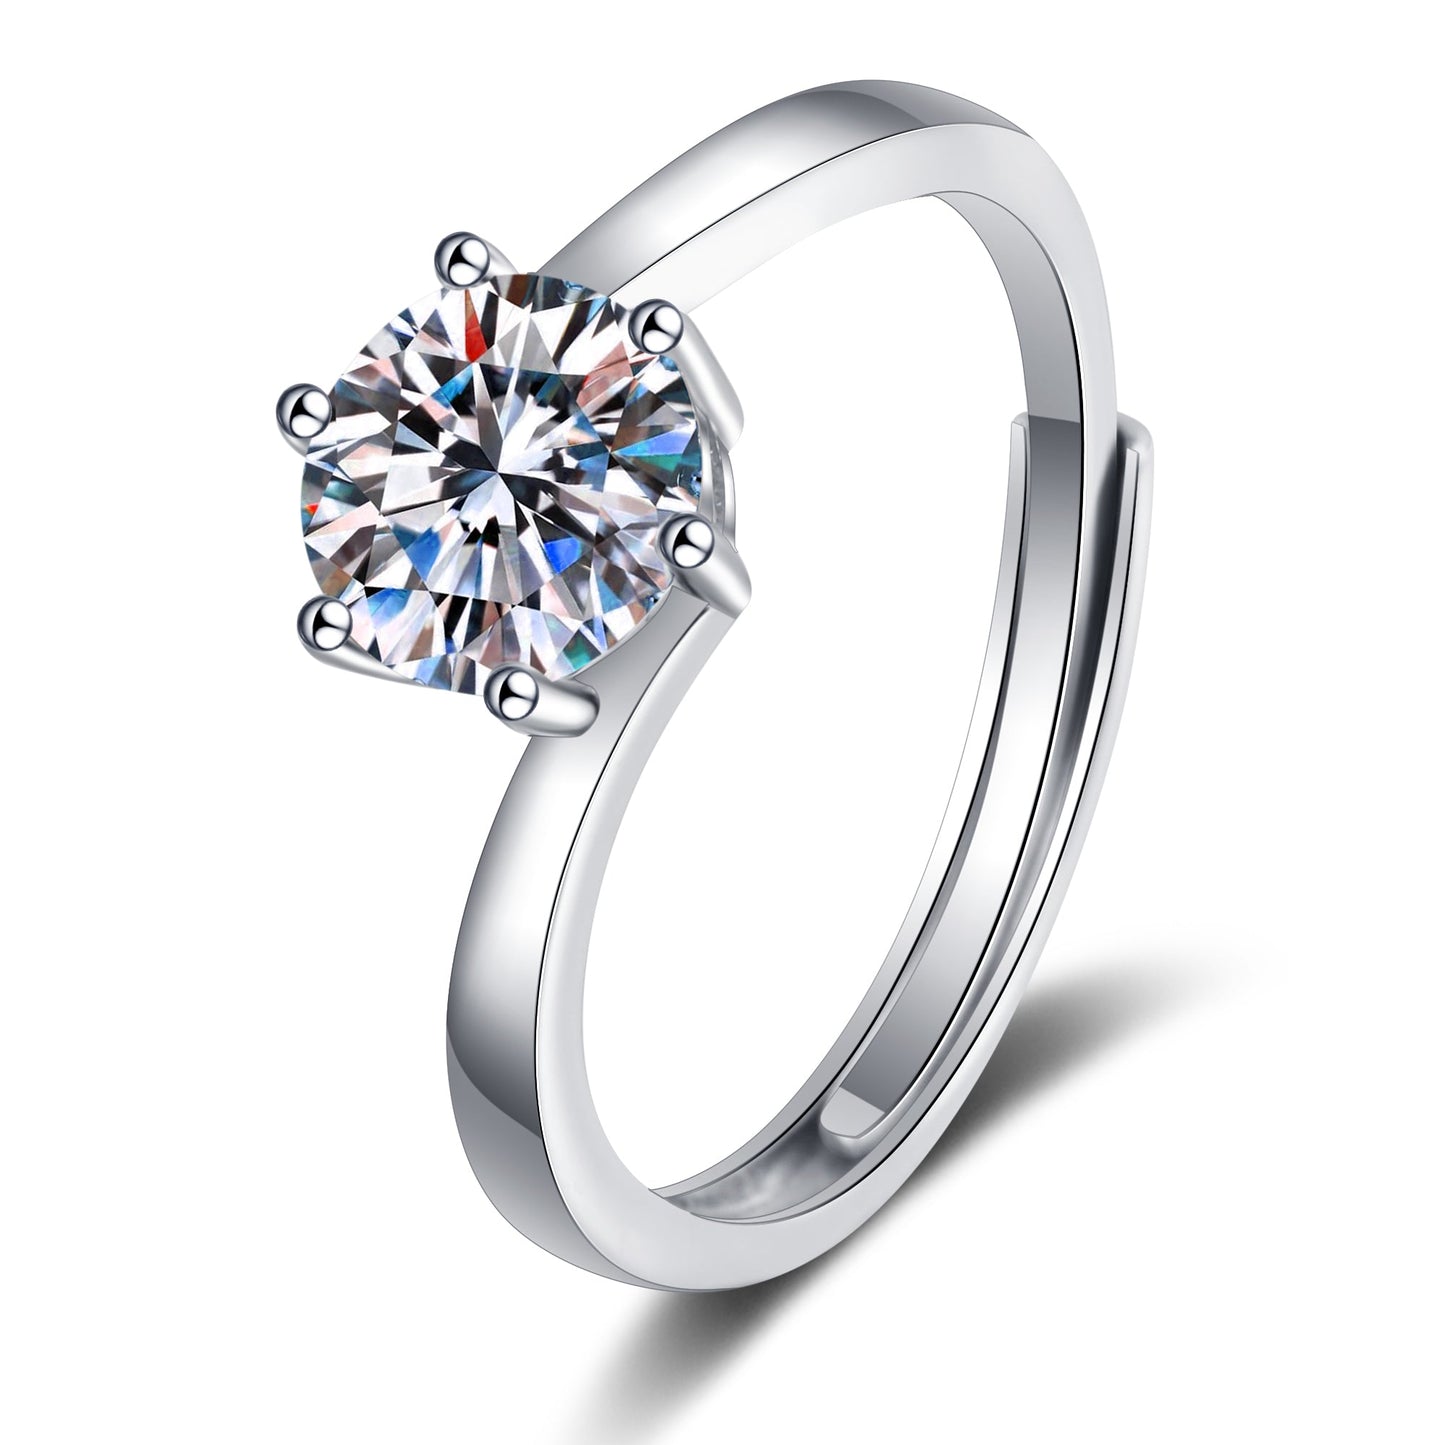 2 CT MOISSANITE Diamond Engagement solitaire Ring, adjustable, Solid 925 Silver, Elegant Wedding Ring, PT950, Passes Diamond Tester az231 Xaxe.com